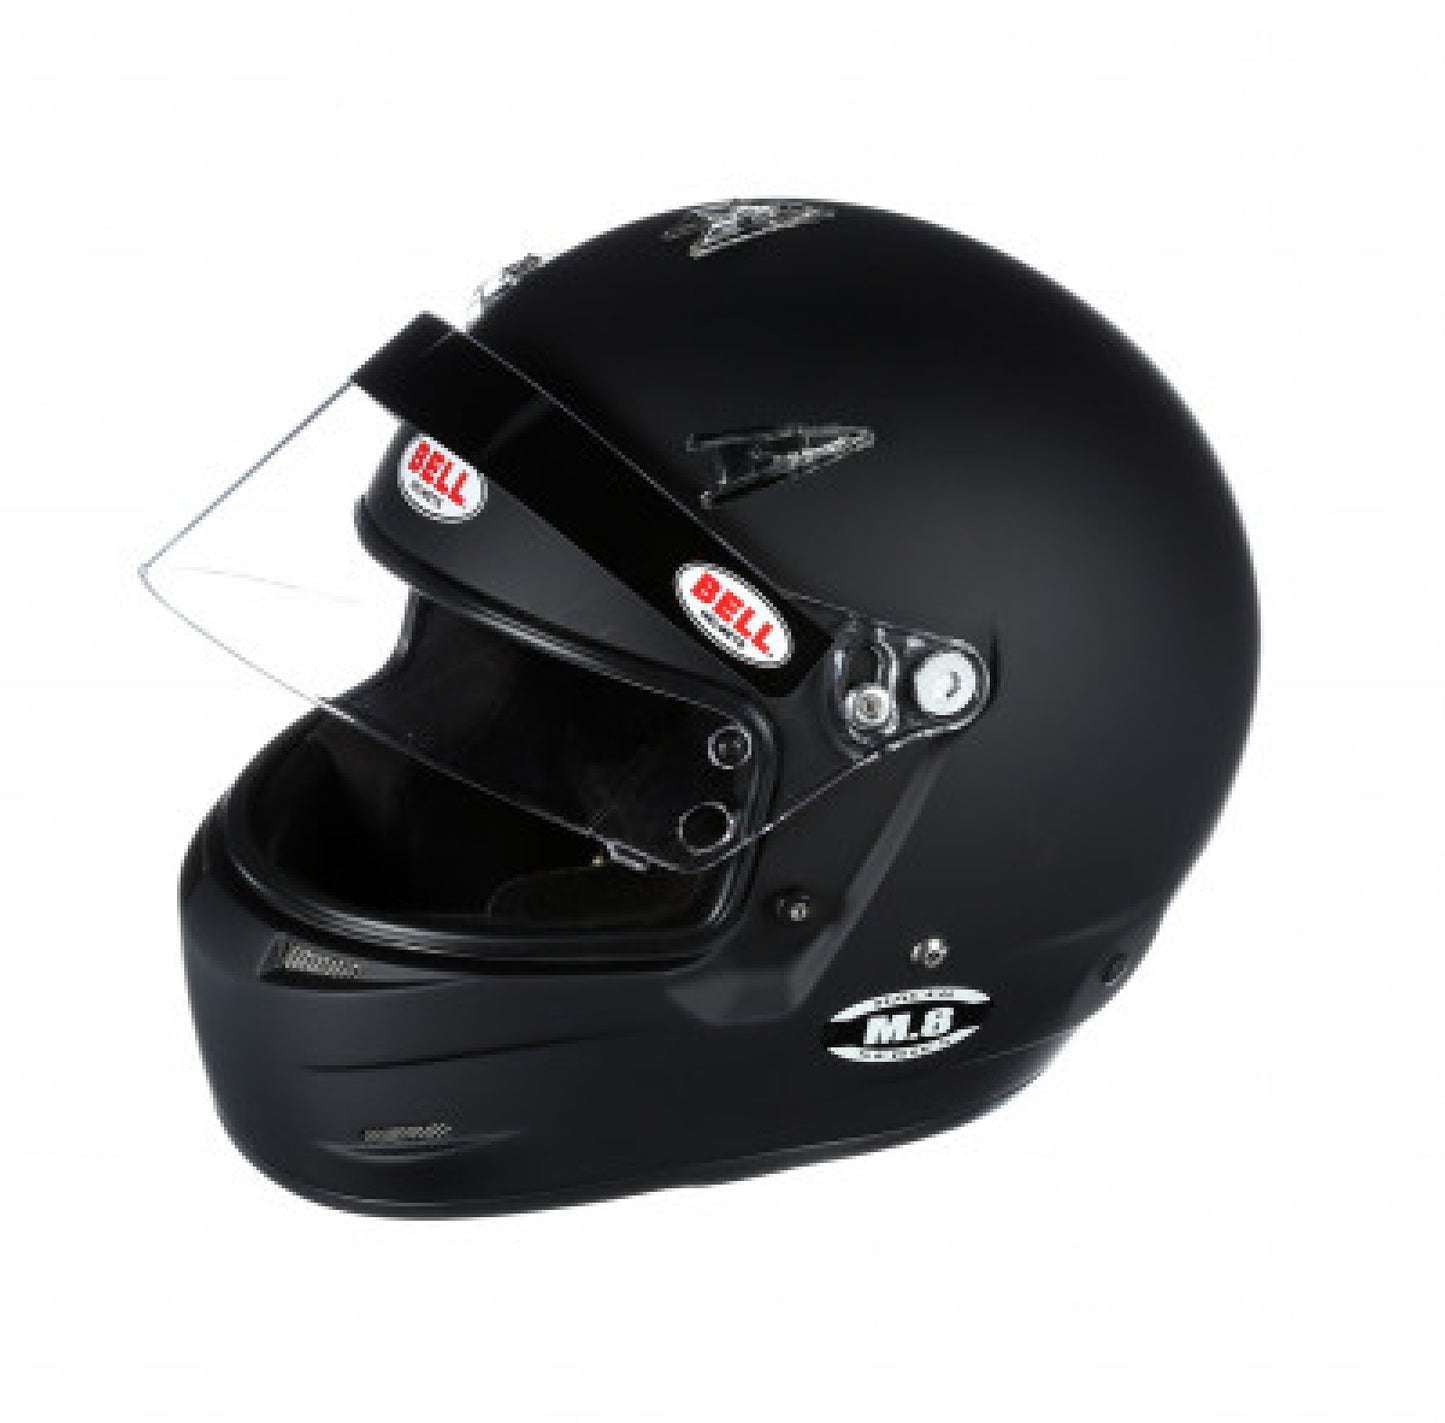 Bell M8 Racing Helmet-Matte Black Size Large